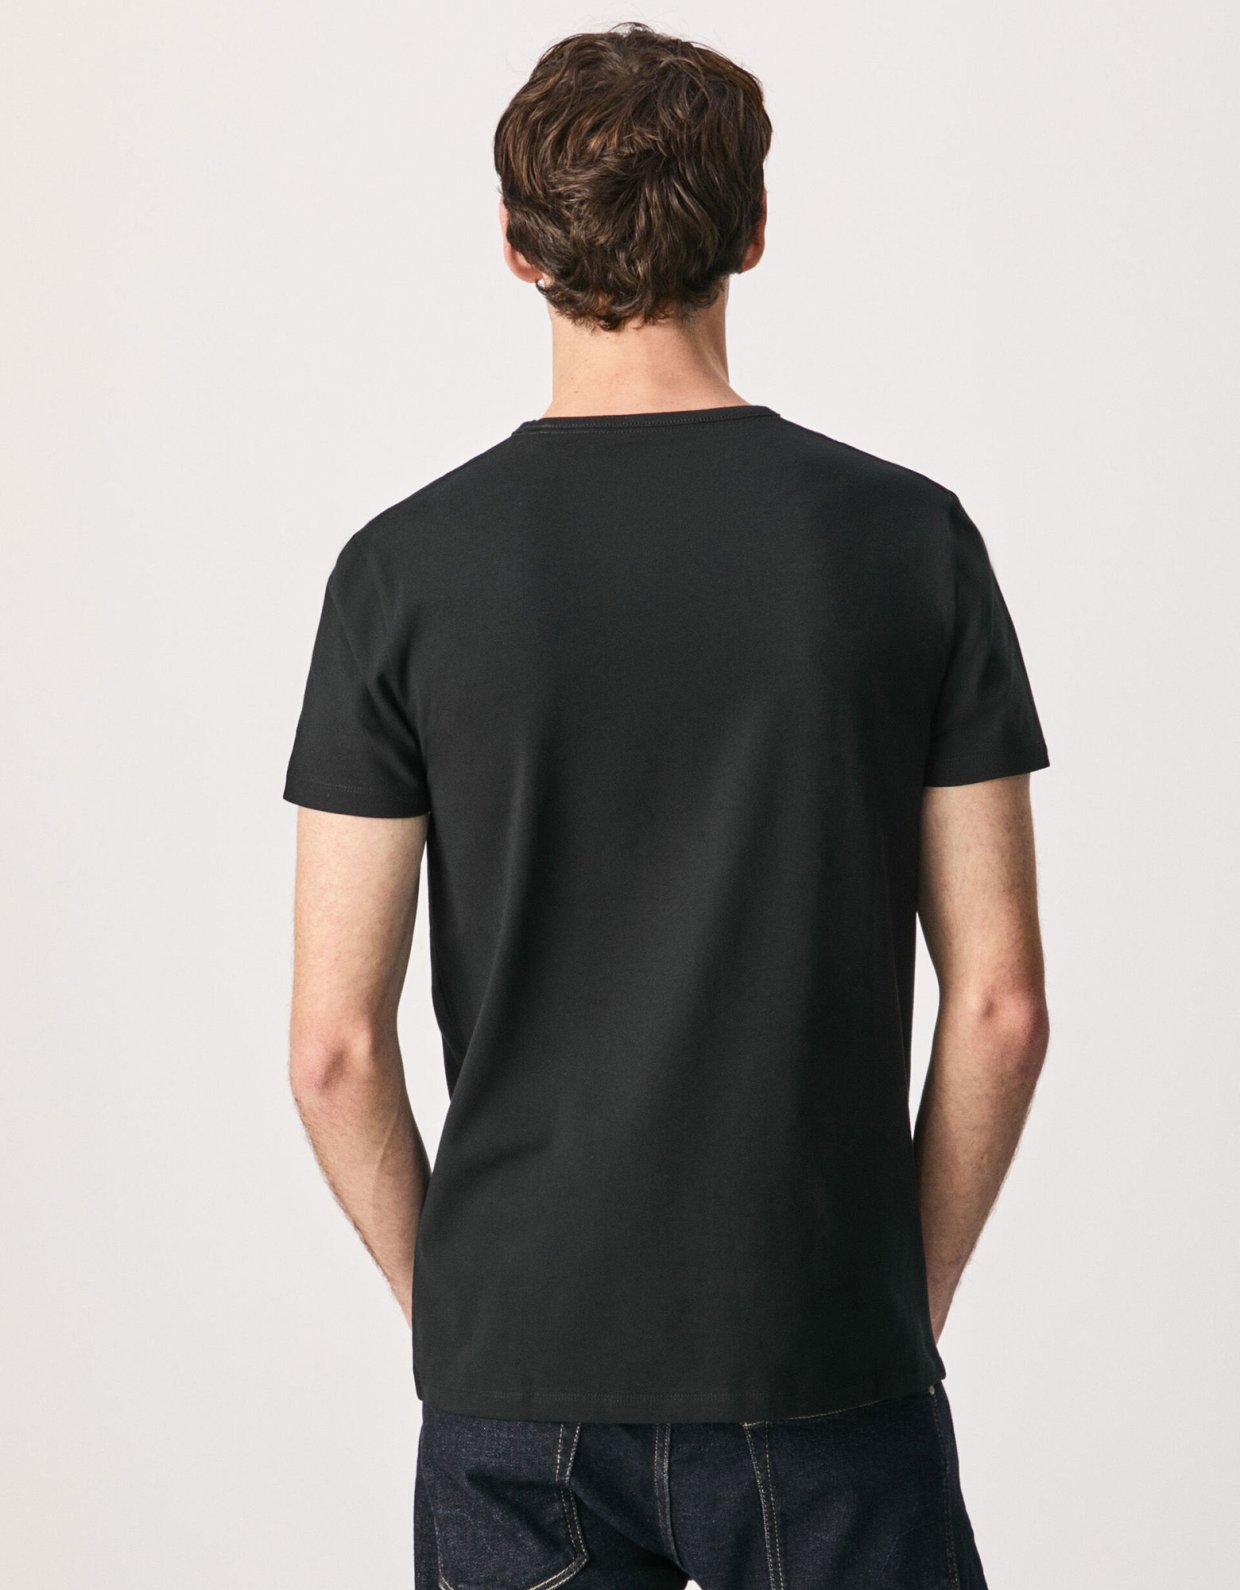 Pepe Jeans Original basic t-shirt black